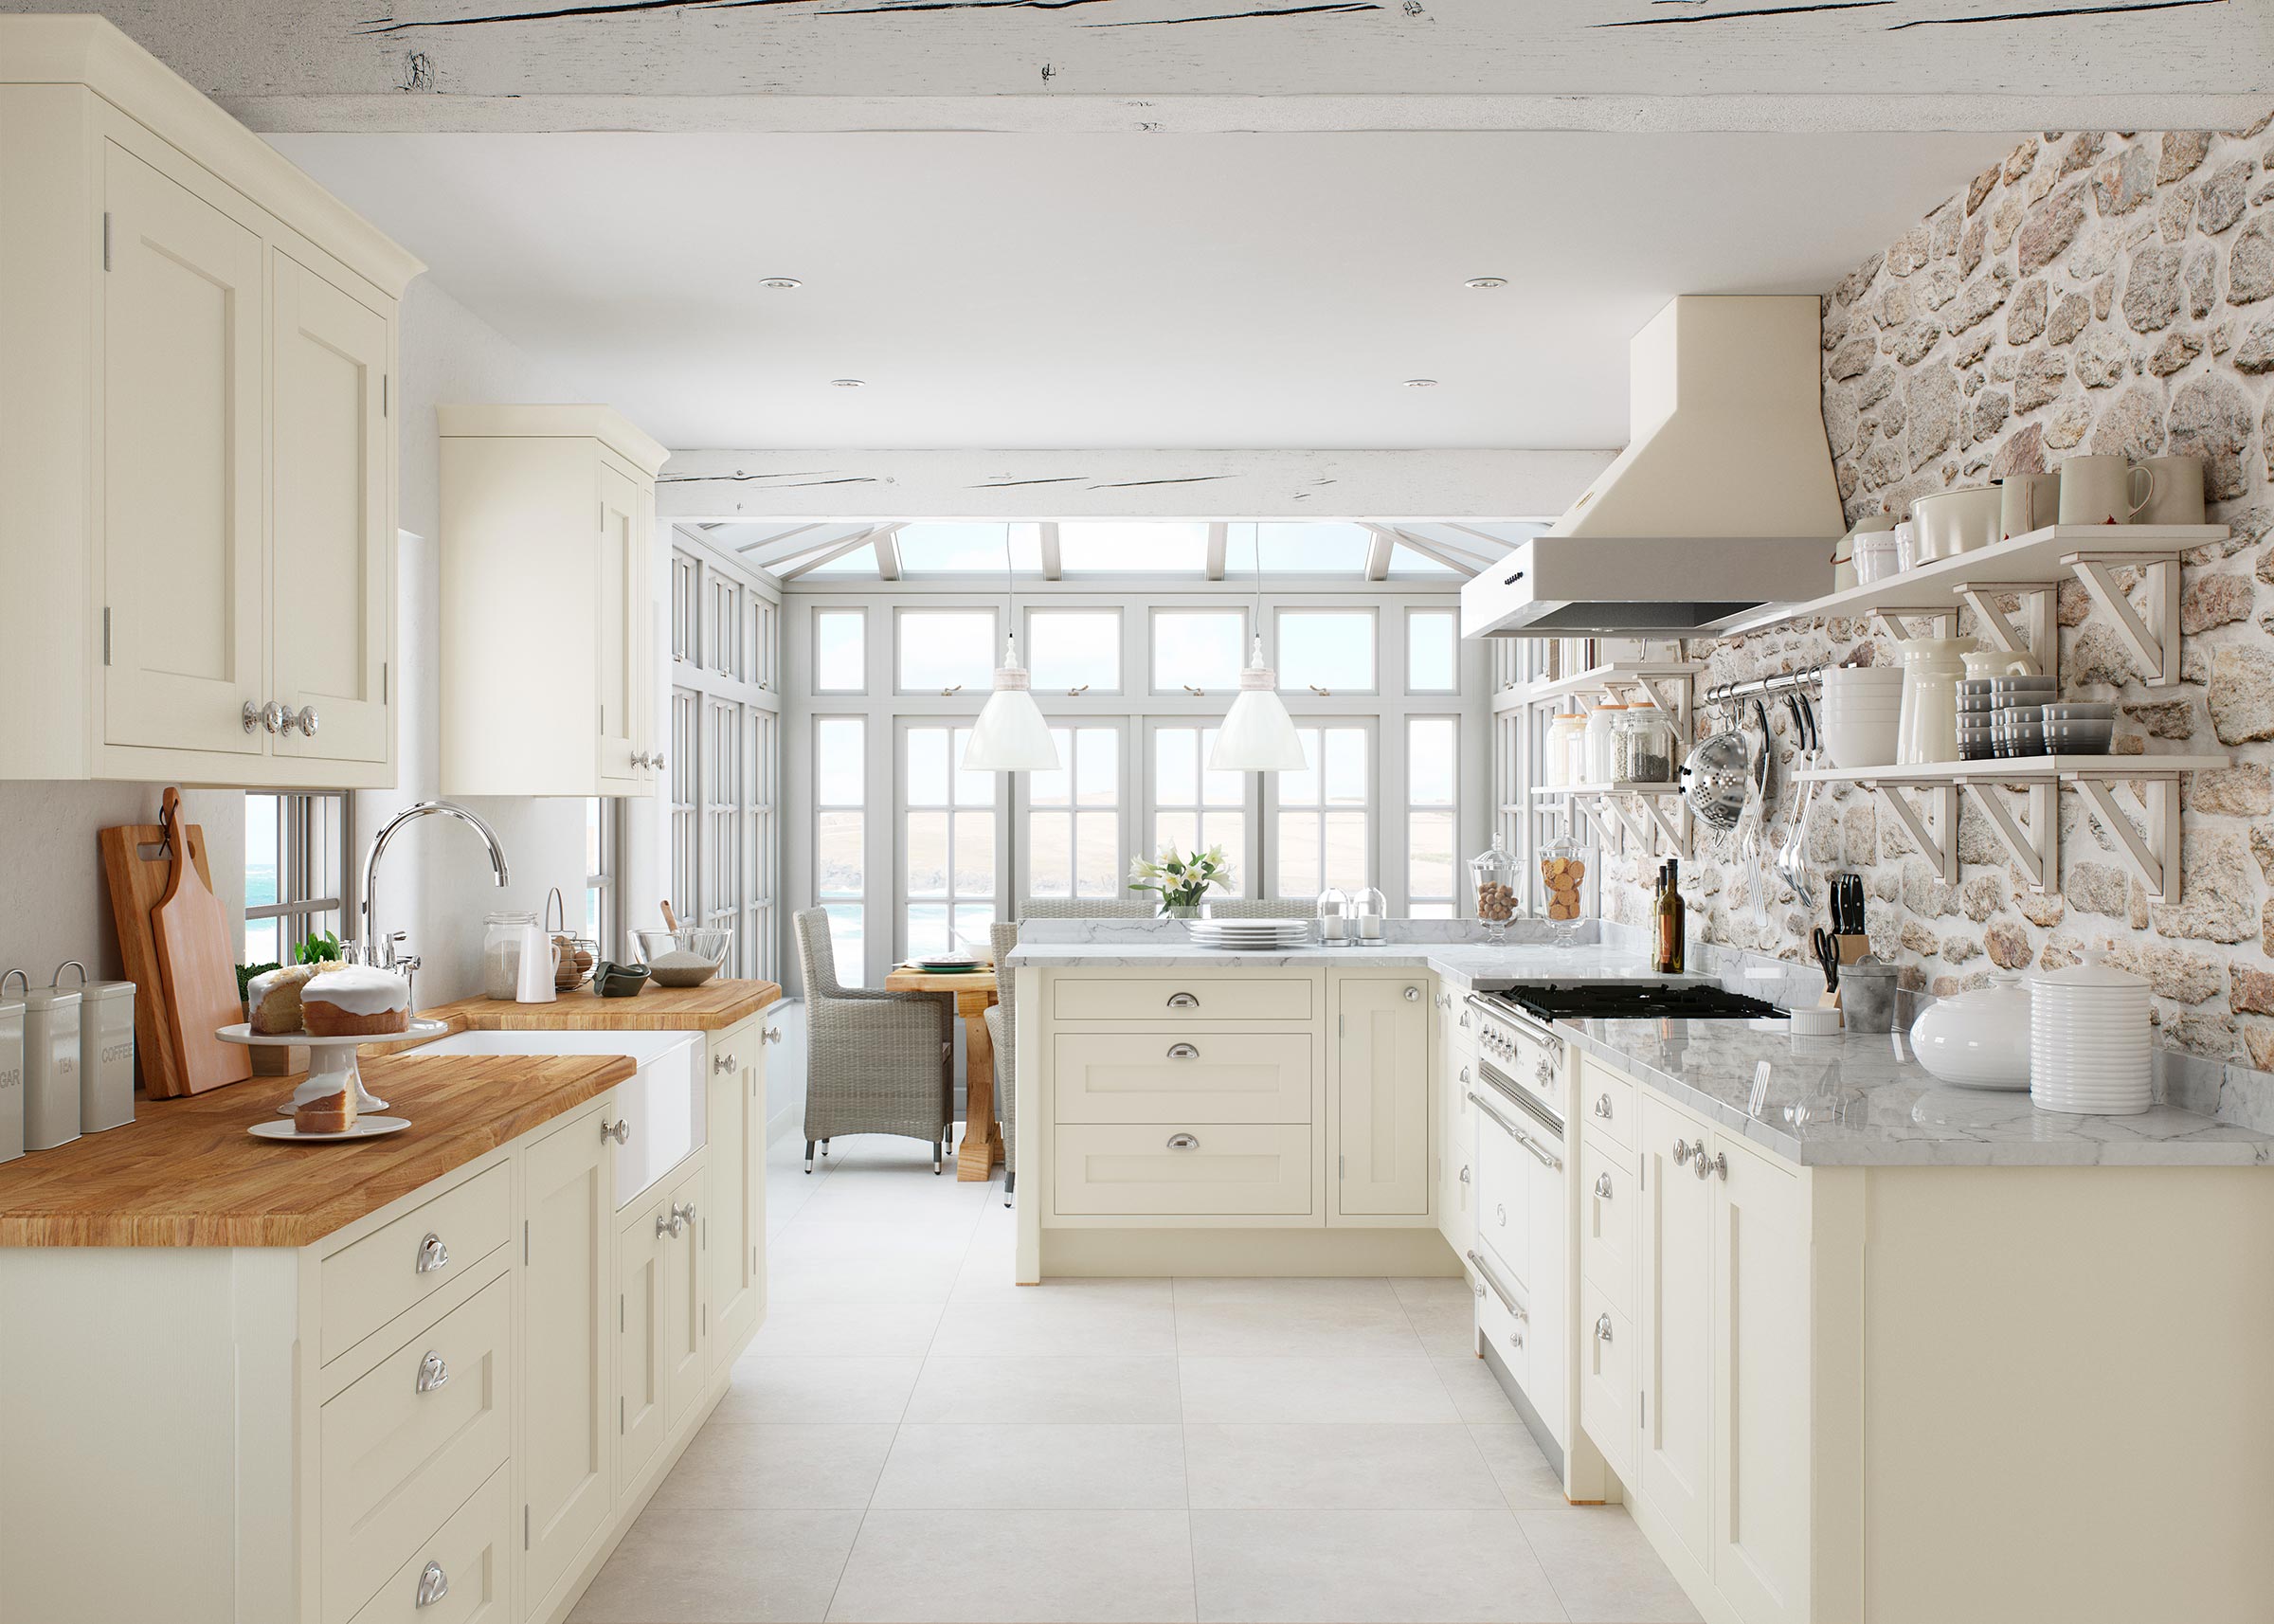 Inframe Ivory Painted Shaker Kitchen, Cream Kitchen Cabinets With Grey Worktop